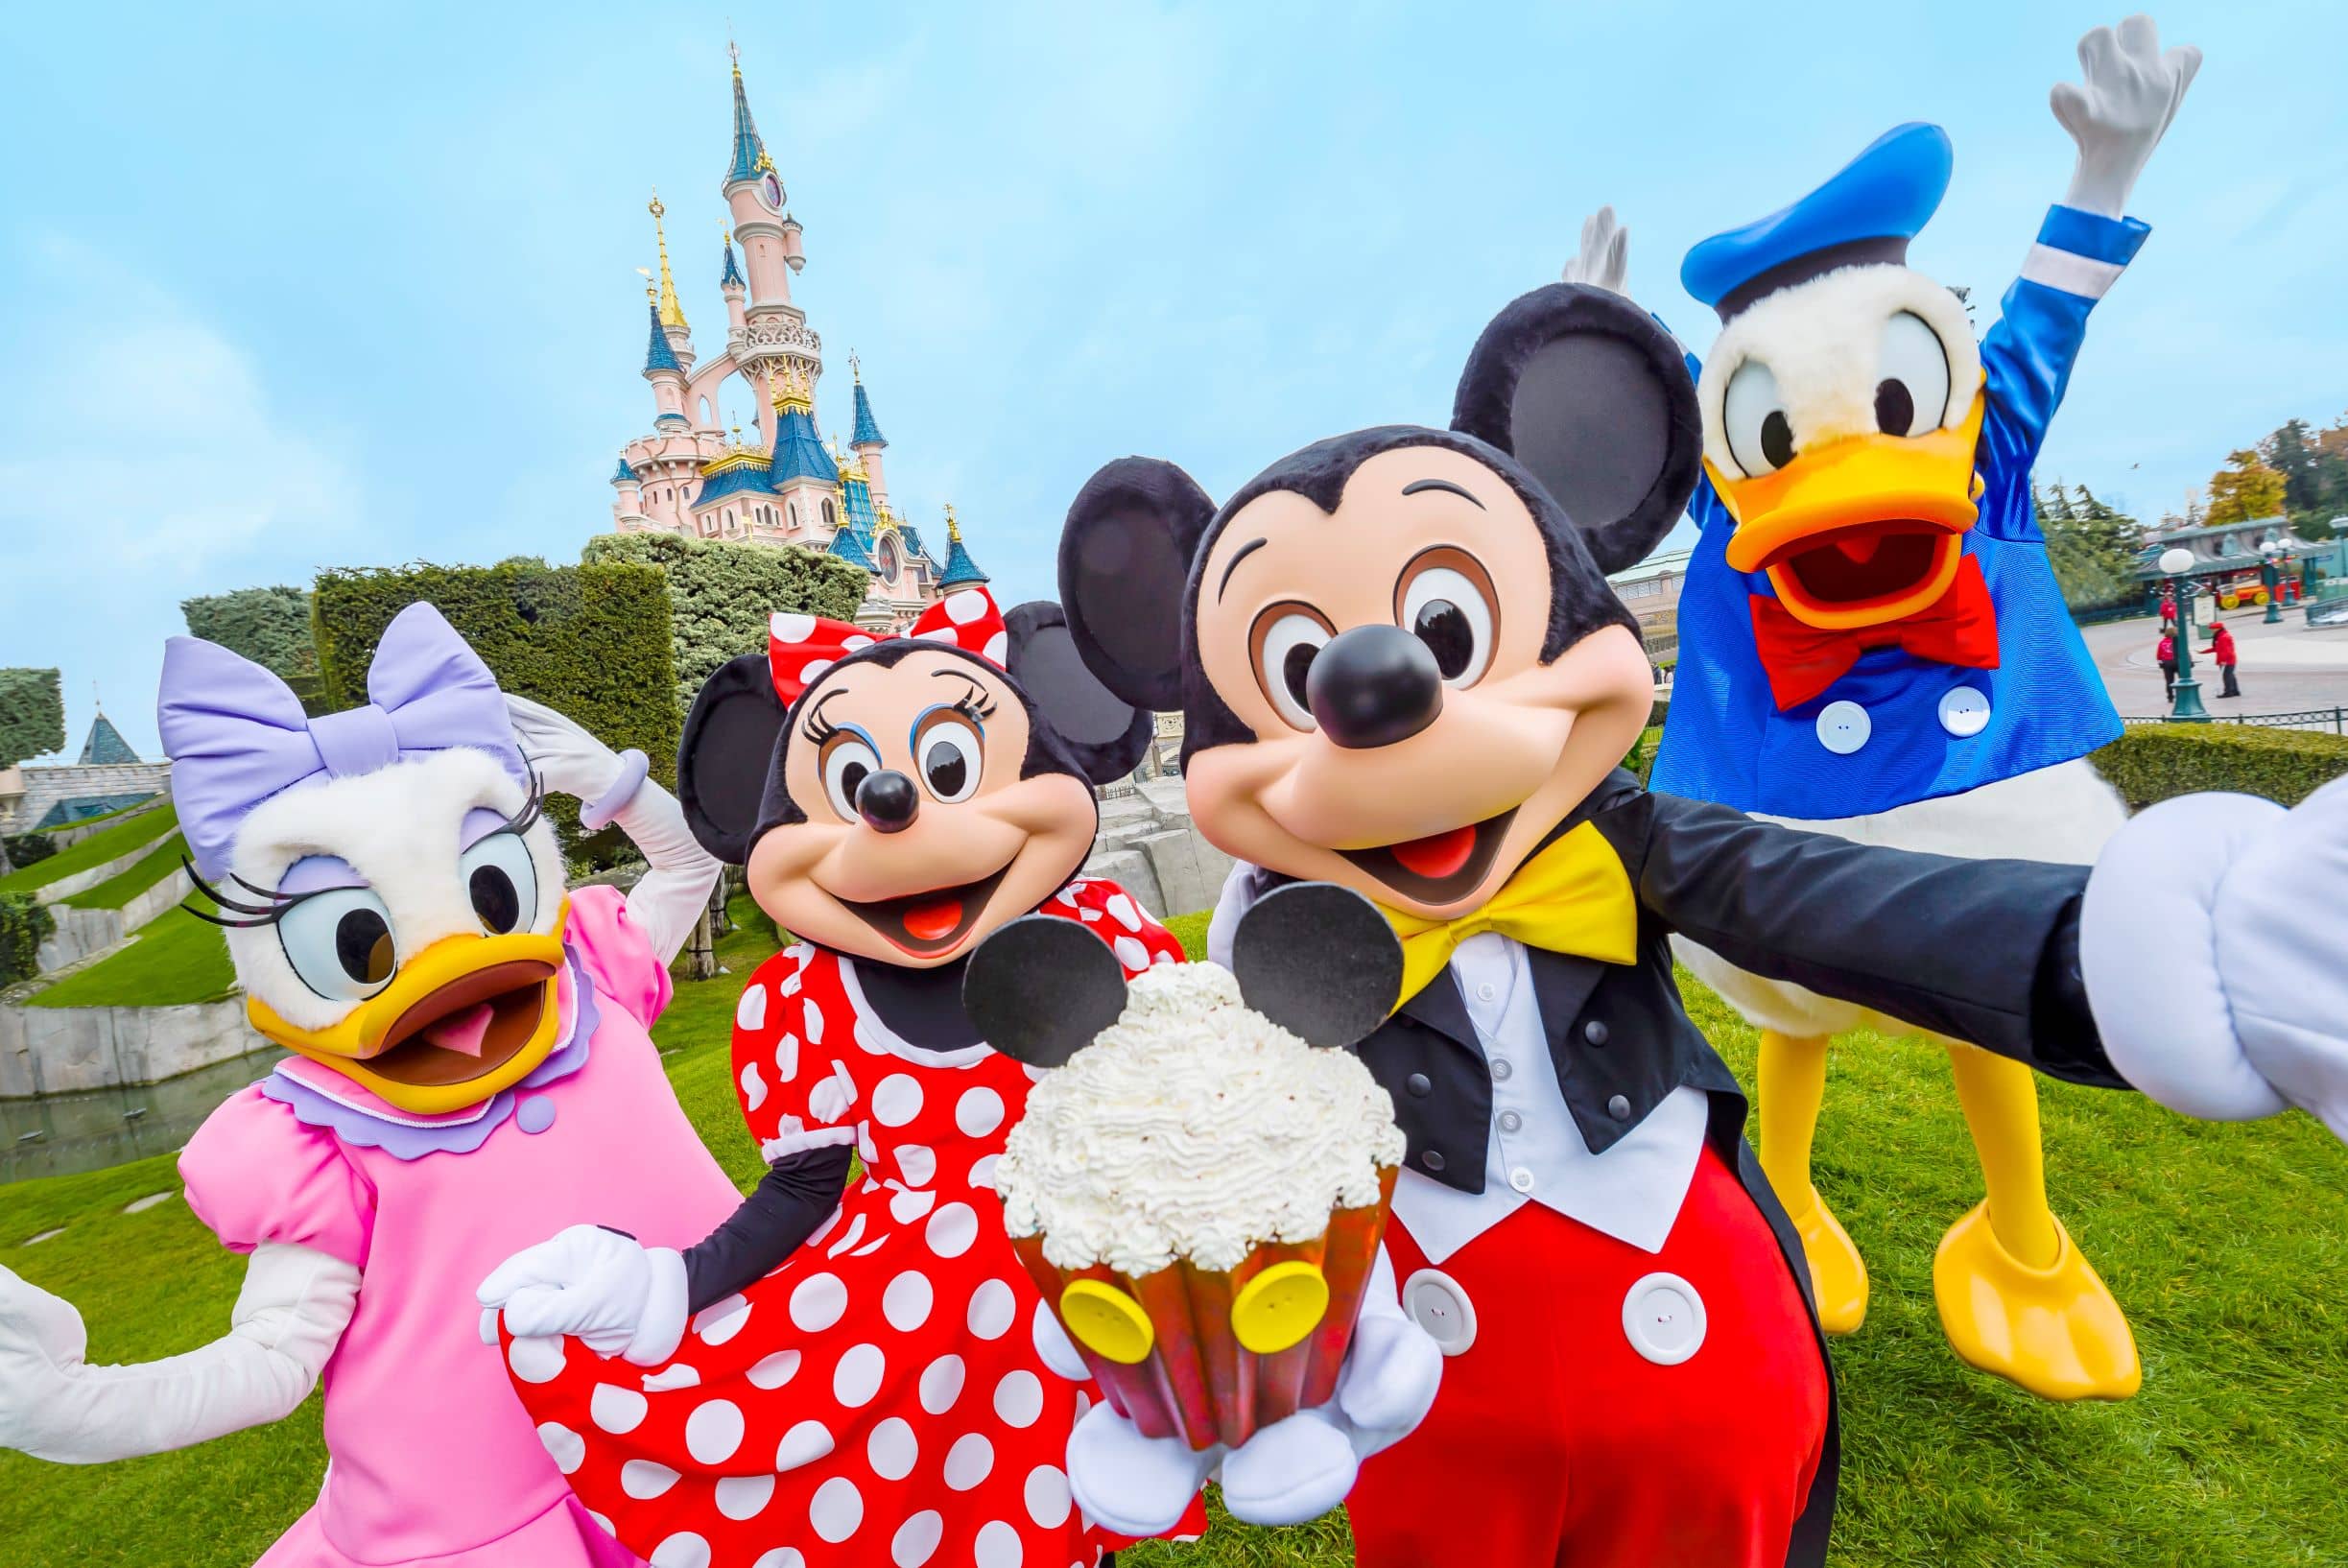 Mickey and friends celebrate his 90th birthday at Disneyland Paris